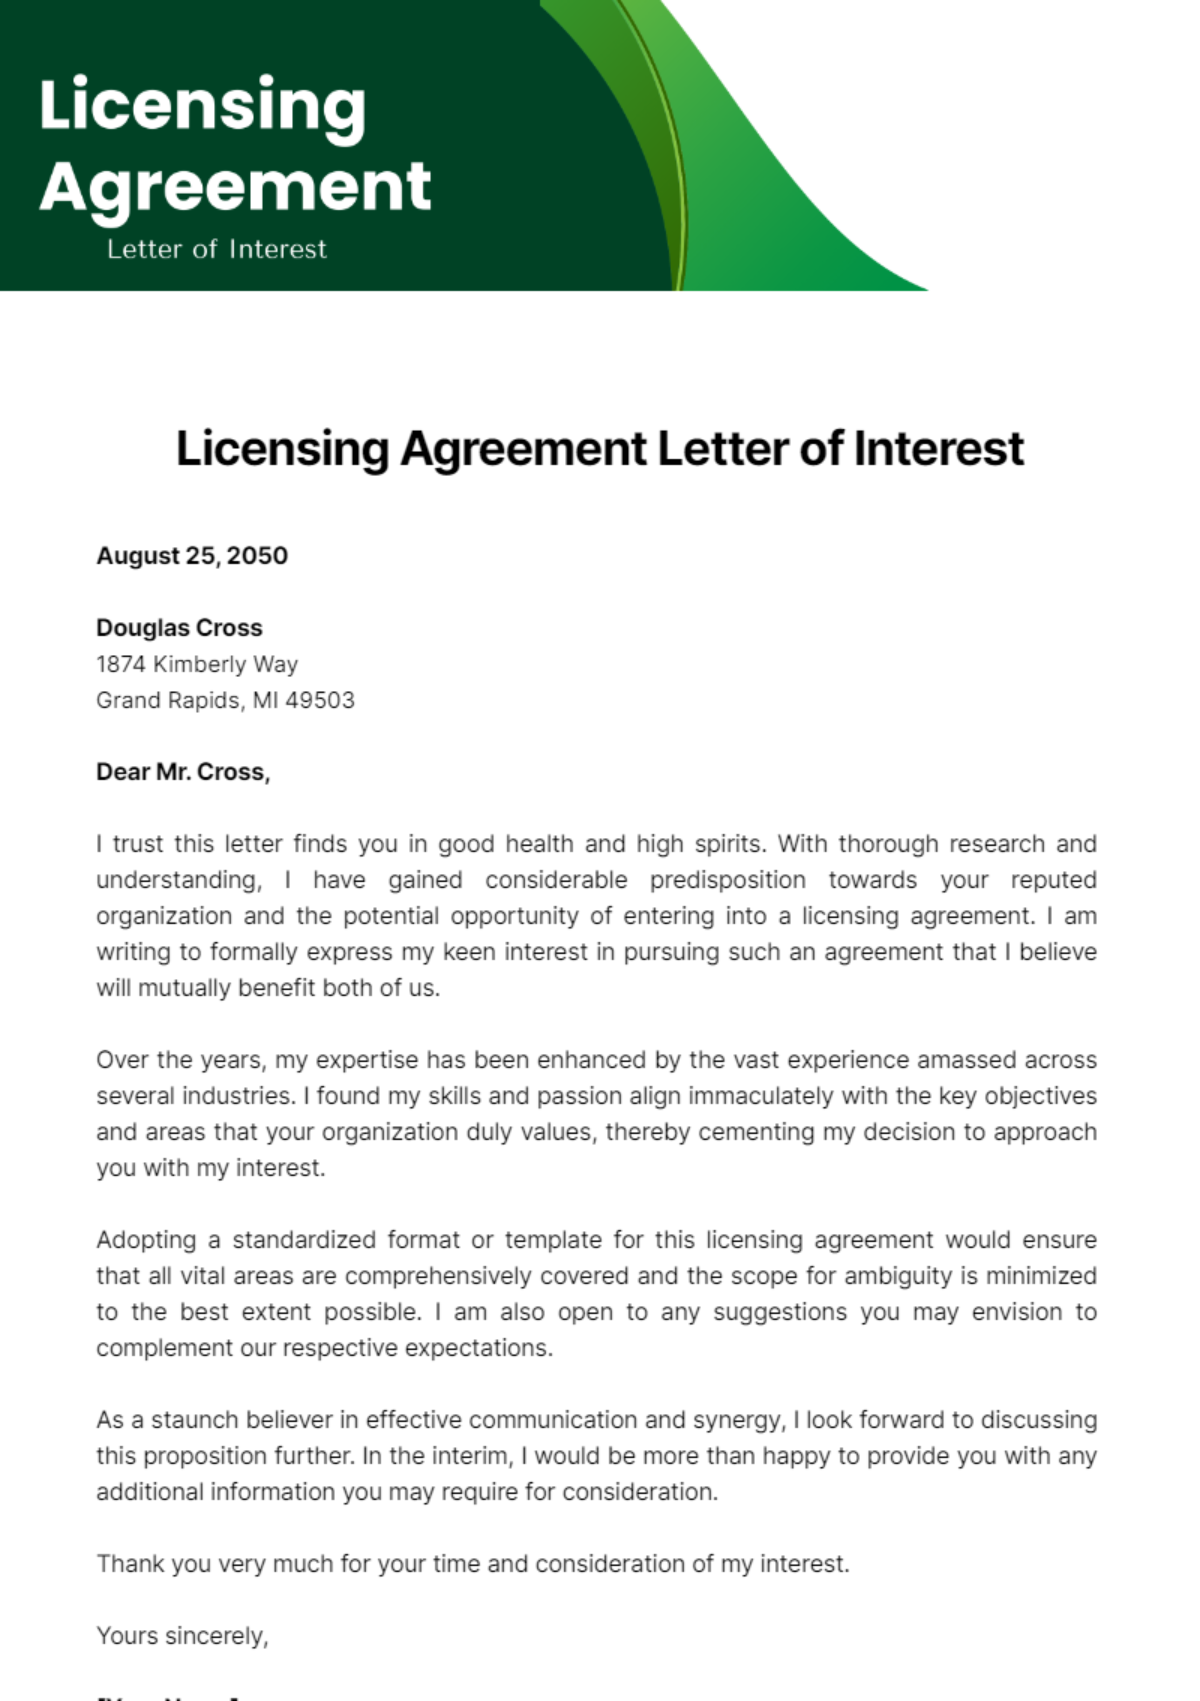 Licensing Agreement Letter of Interest Template